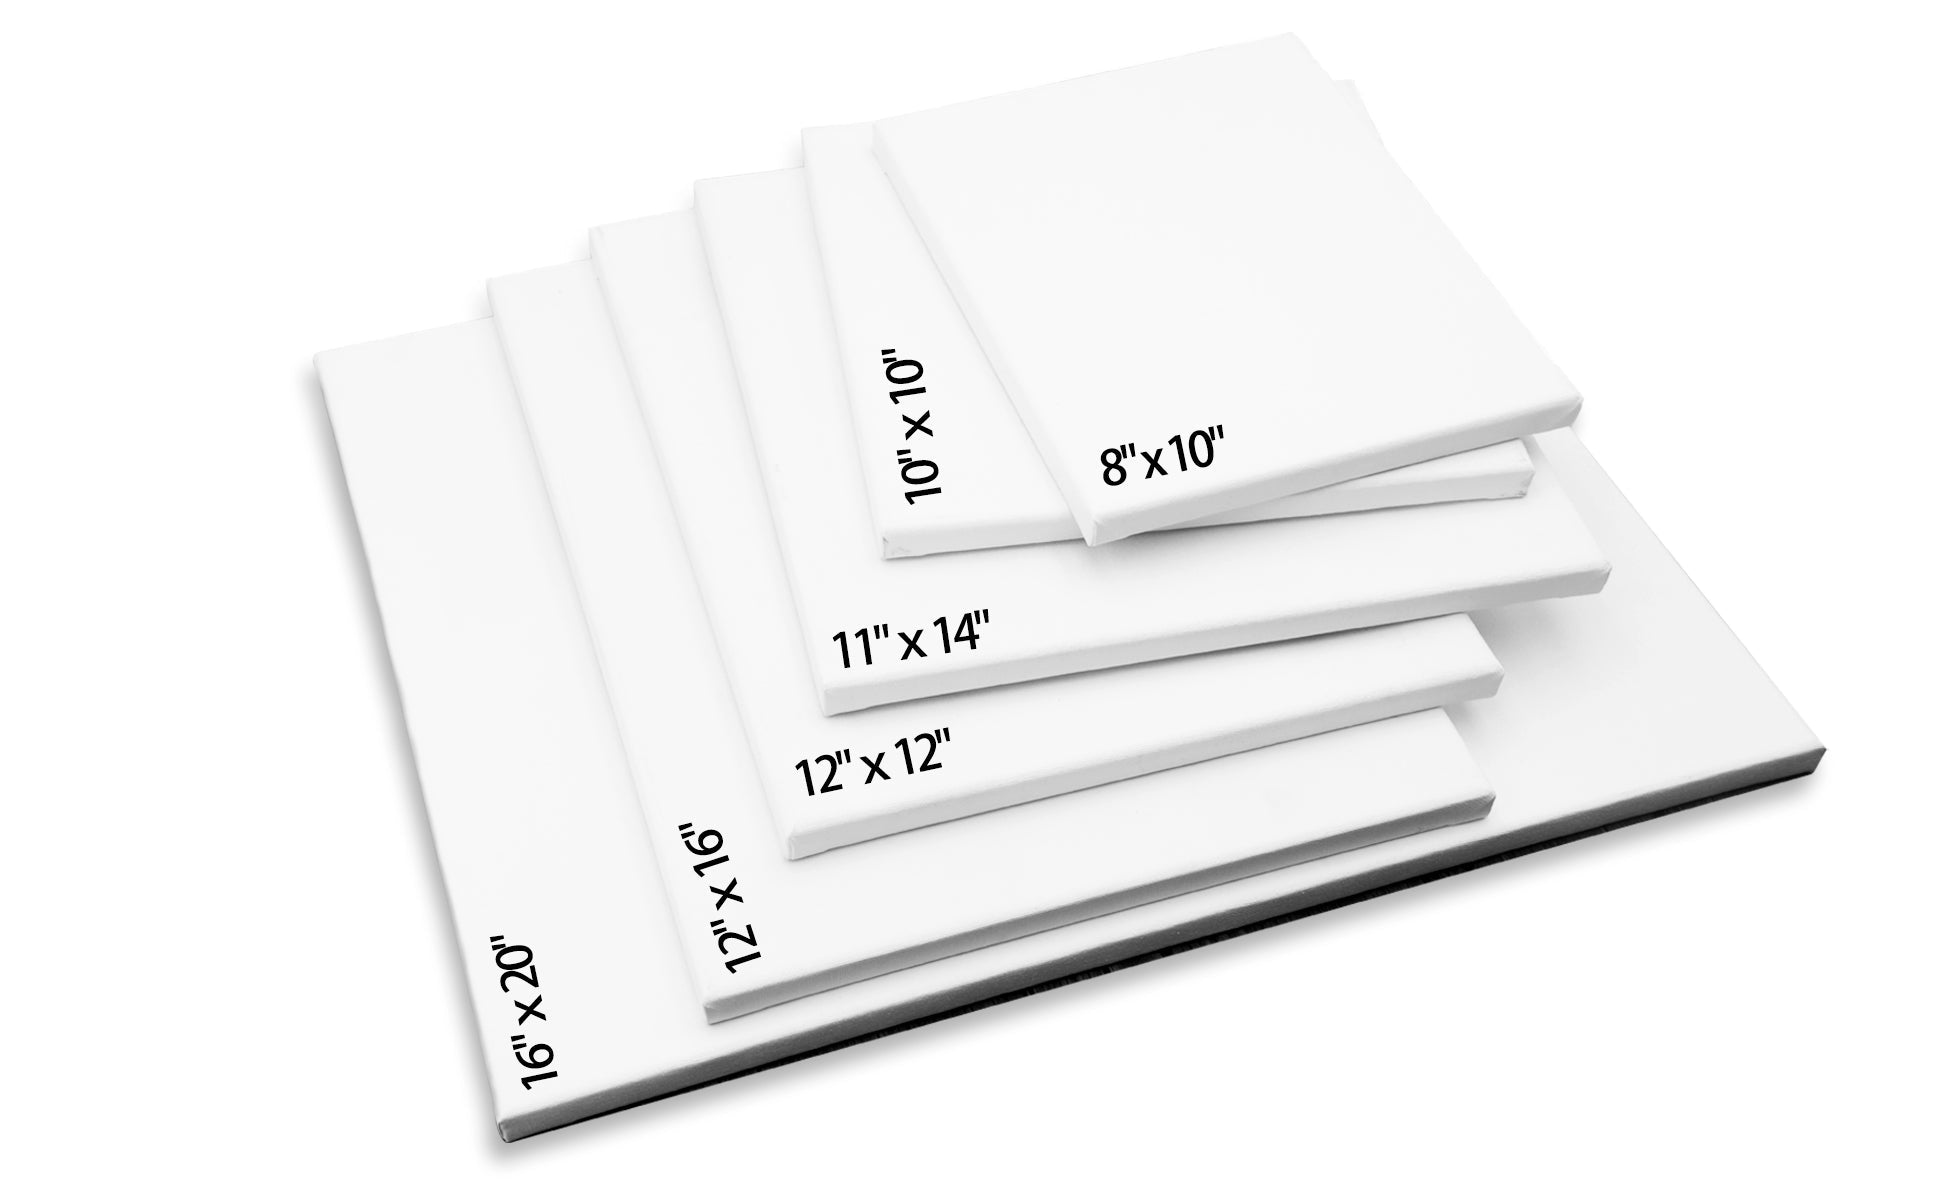 Artecho Stretched Canvas 6 Set Value Pack White - 30cm x 30cm - Lifespace